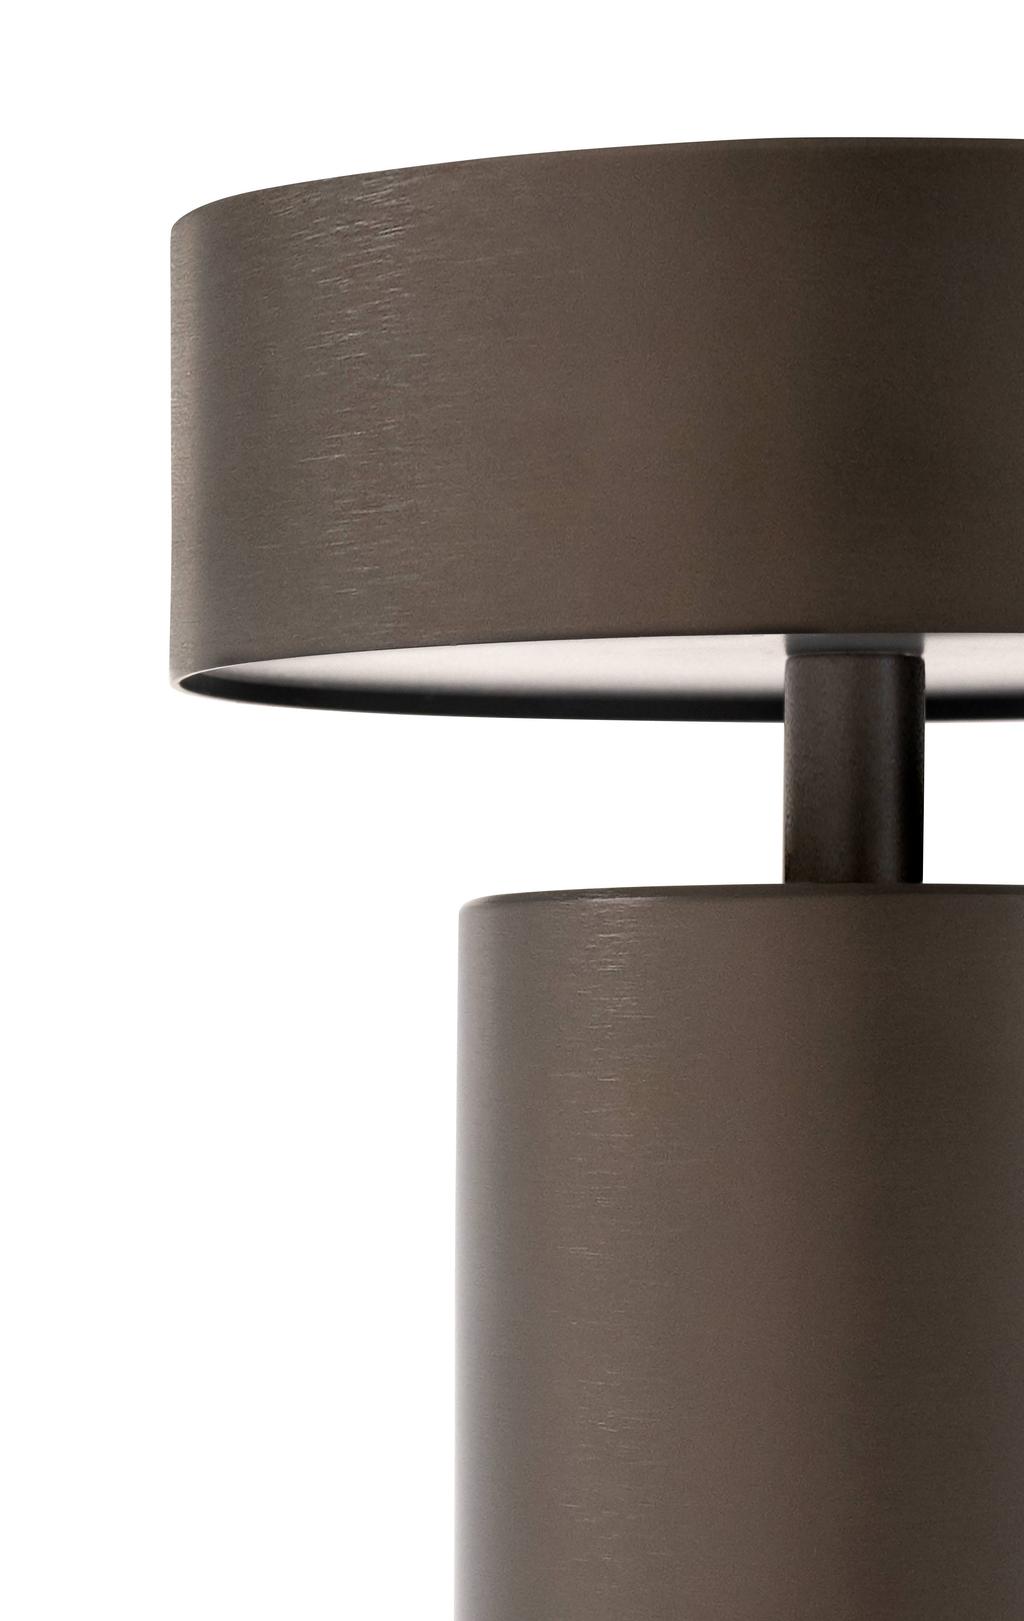 COLUMN TABLE LAMP Category: LED Lamp Aluminum, ABS, LED, 3,2 W Color: Bronze Battery Time: 9 hours Colli: 1 Gross Weight: 0,749 Volume: 0,0072 H: 17,5 cm, Ø: 12 cm 17,5 cm THE LED LIGHTBULB PRODUCES